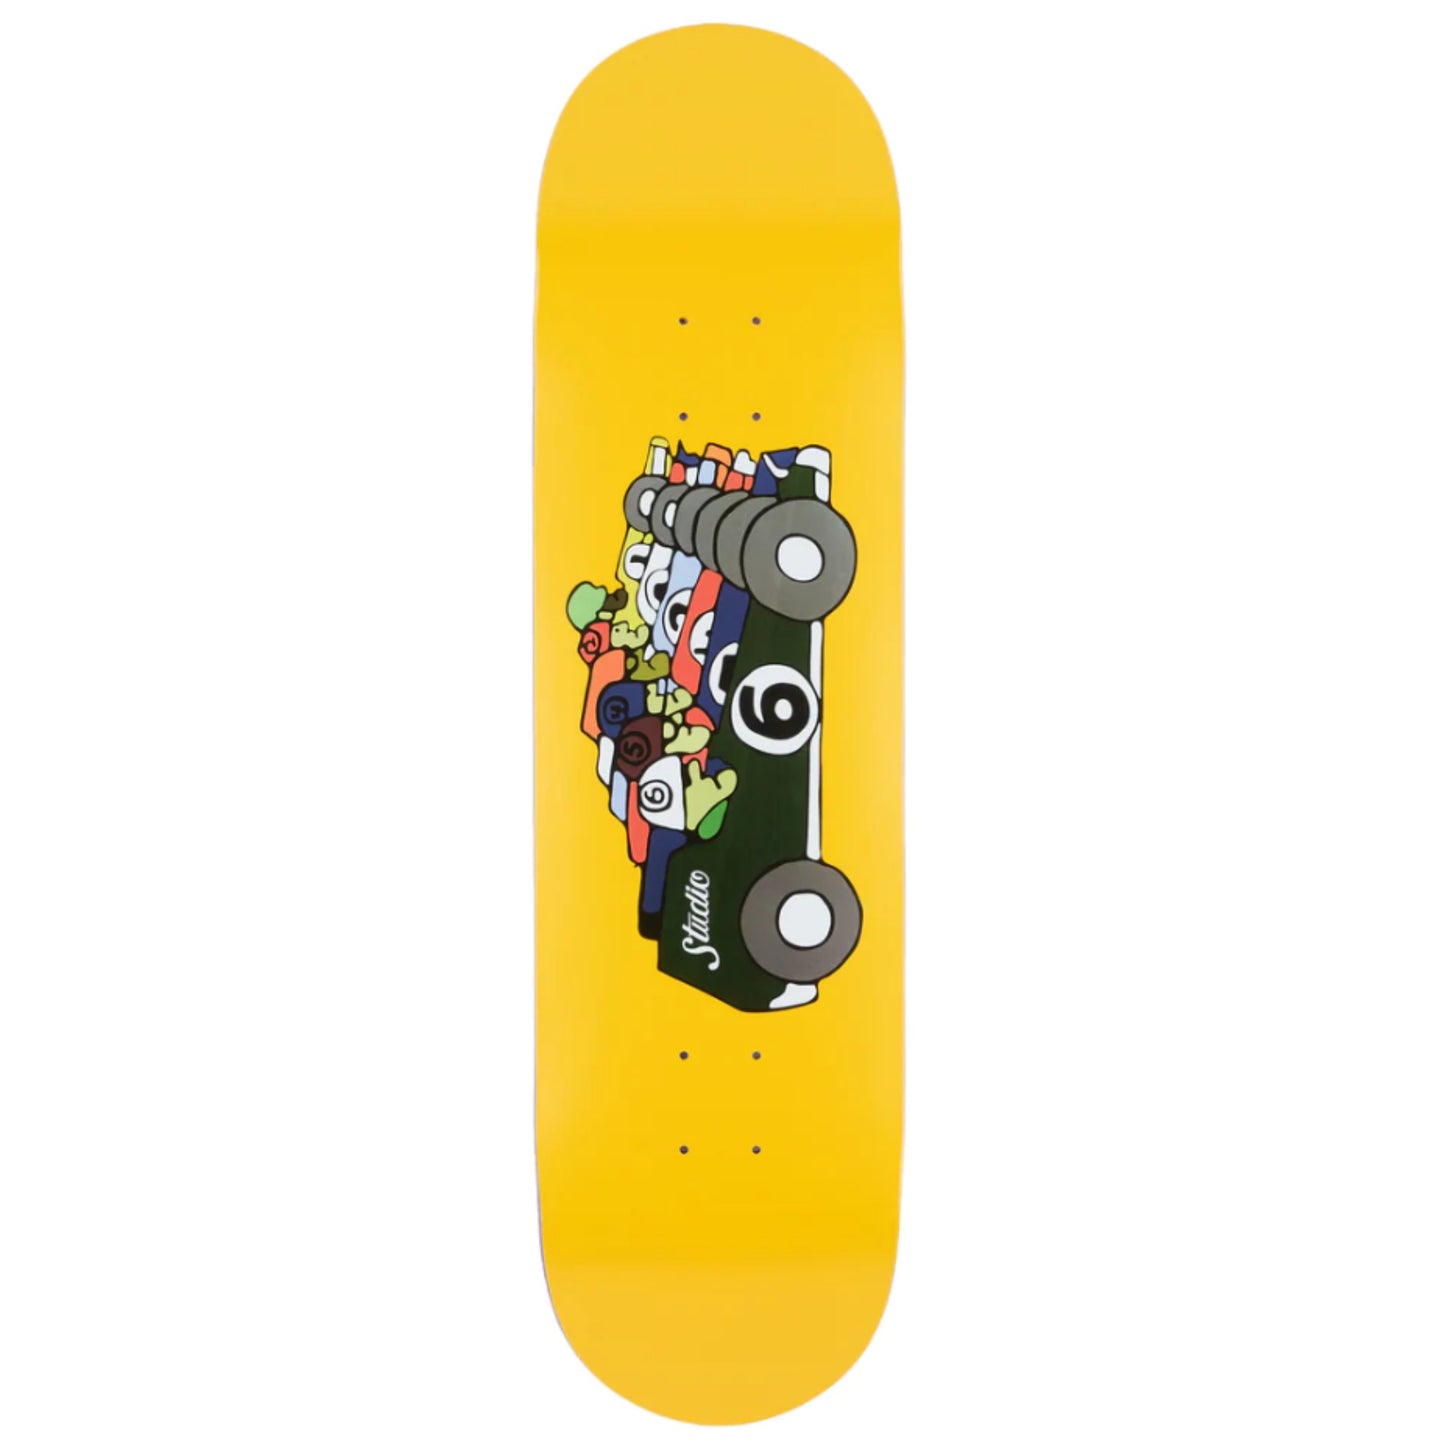 Studio - "Race Cars" - Skateboard Deck - 8.0"